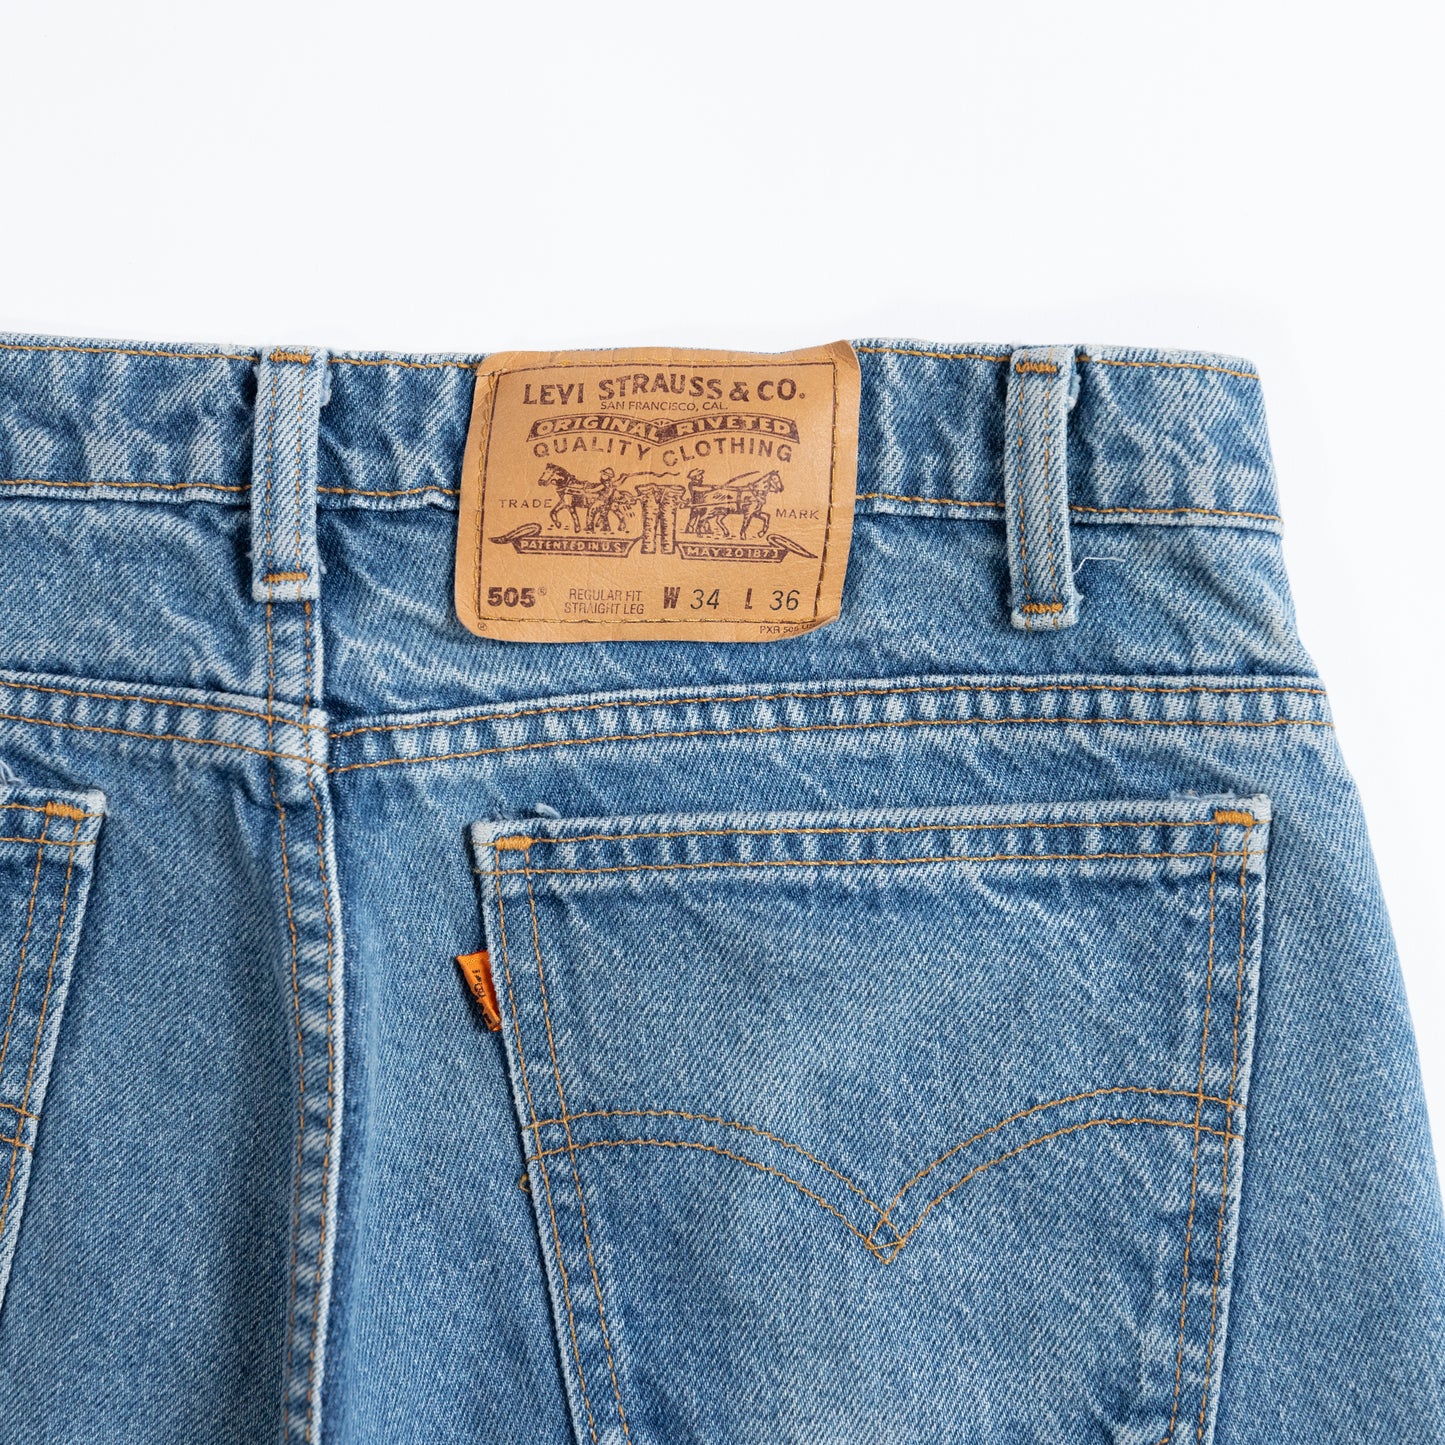 90s Levi's 505 Orange Tab Pants